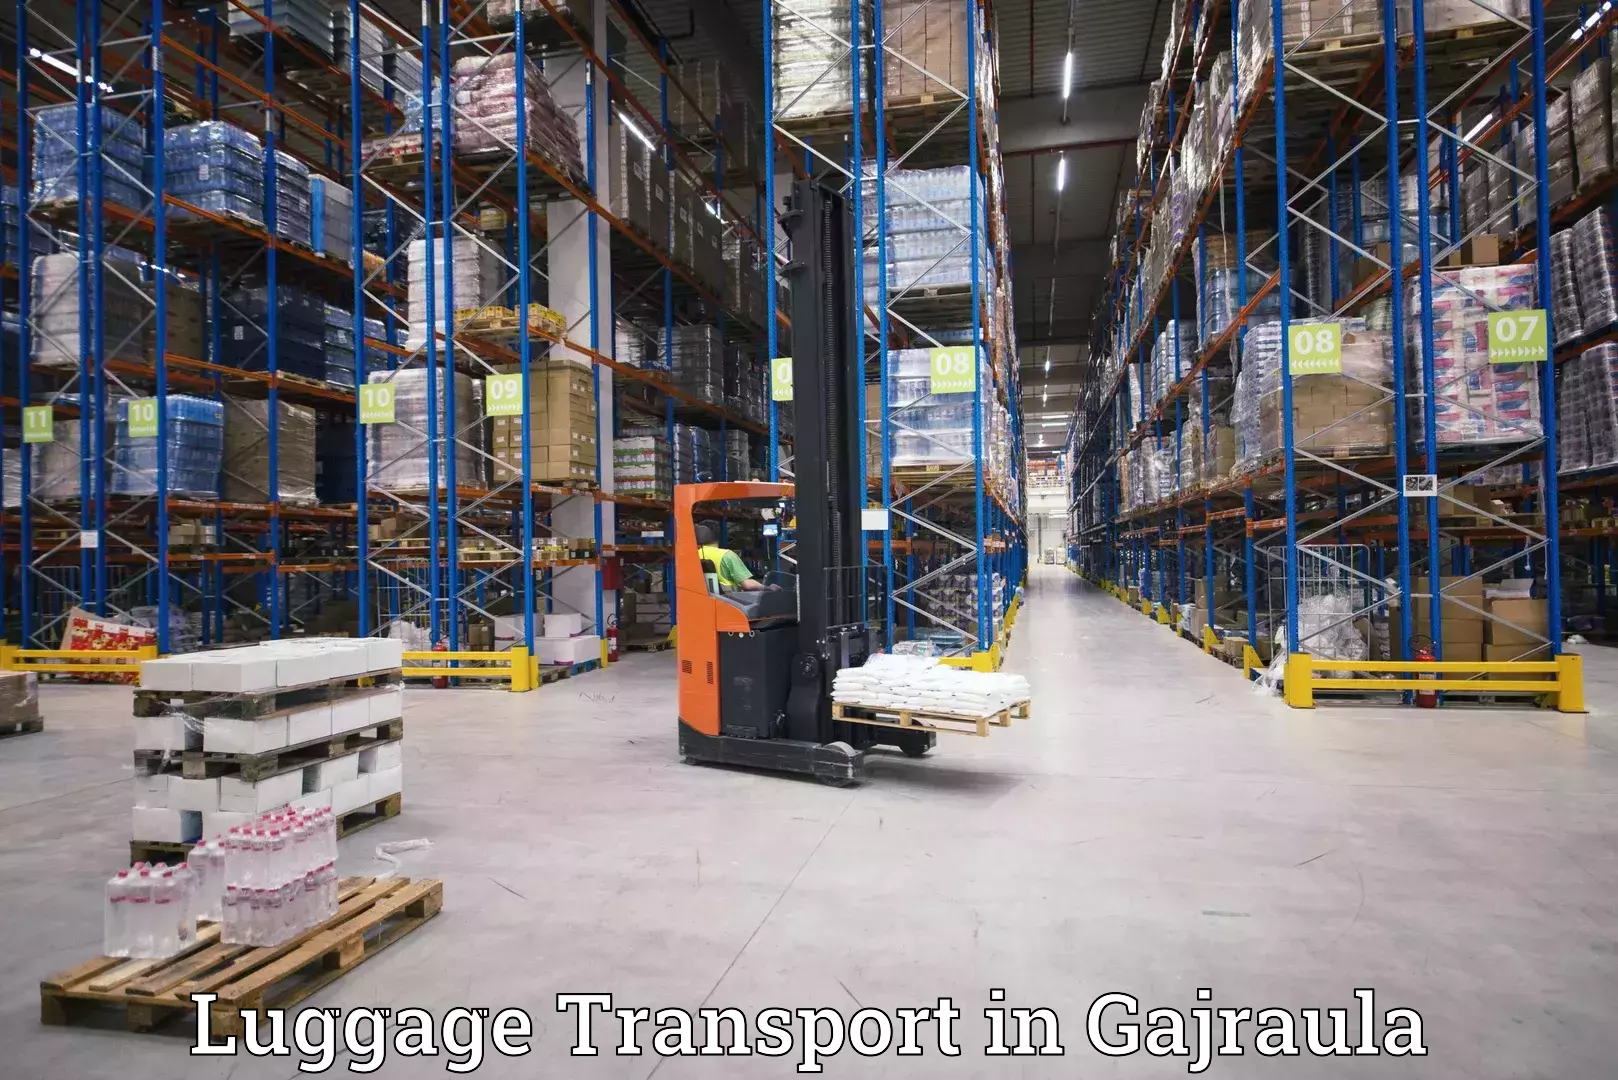 Luggage transport consultancy in Gajraula